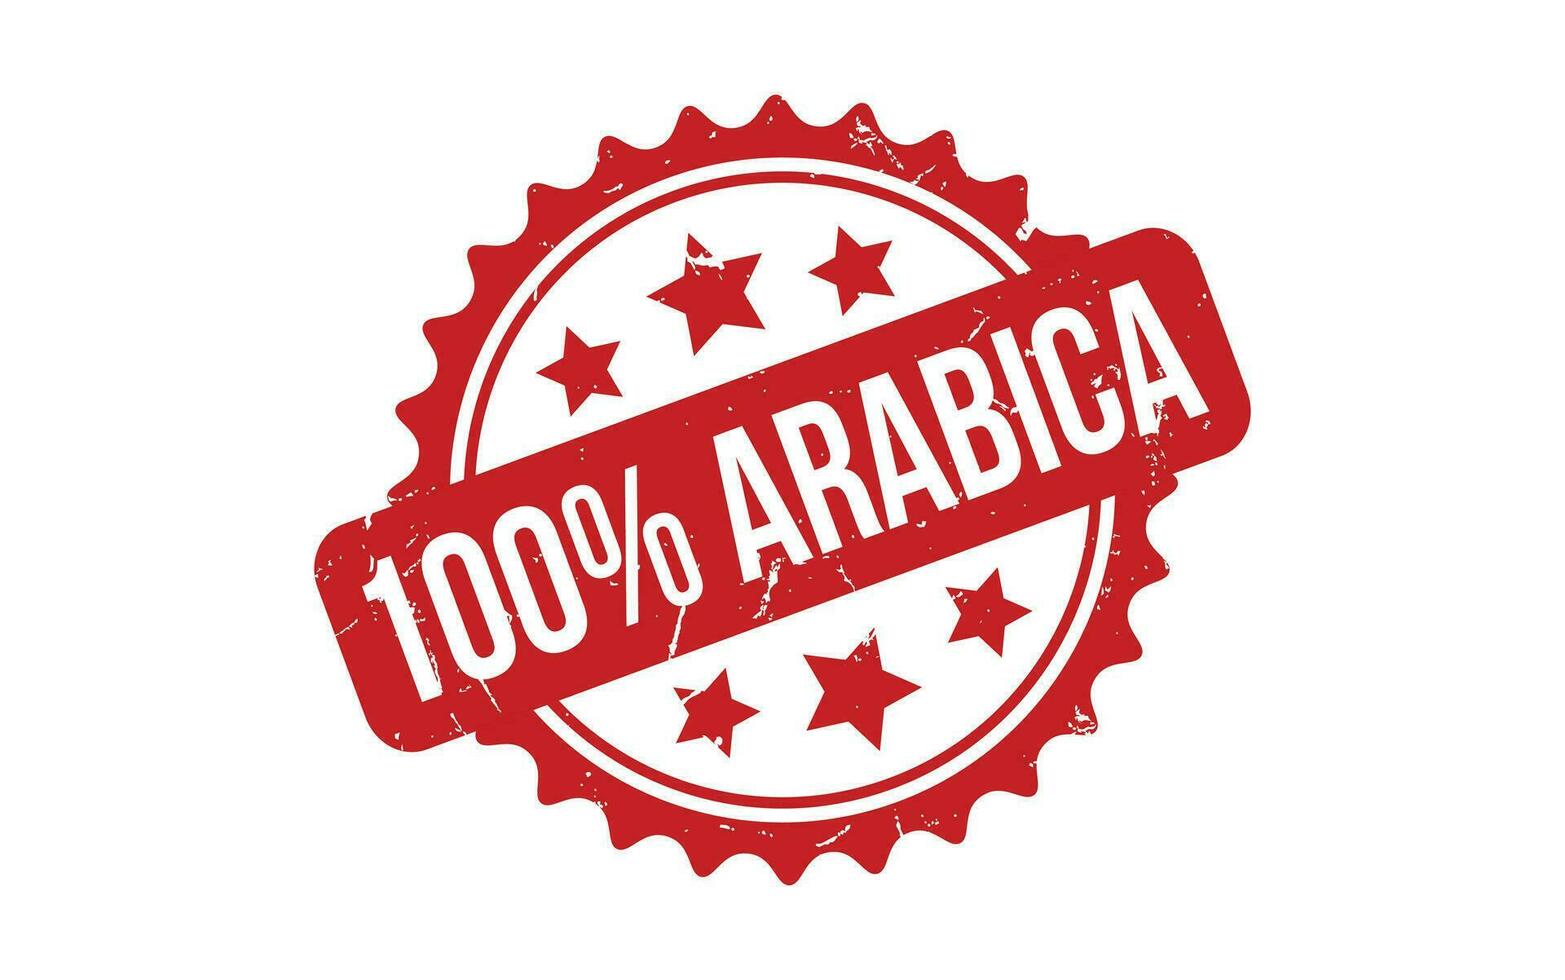 100 Percent Arabica rubber grunge stamp seal vector